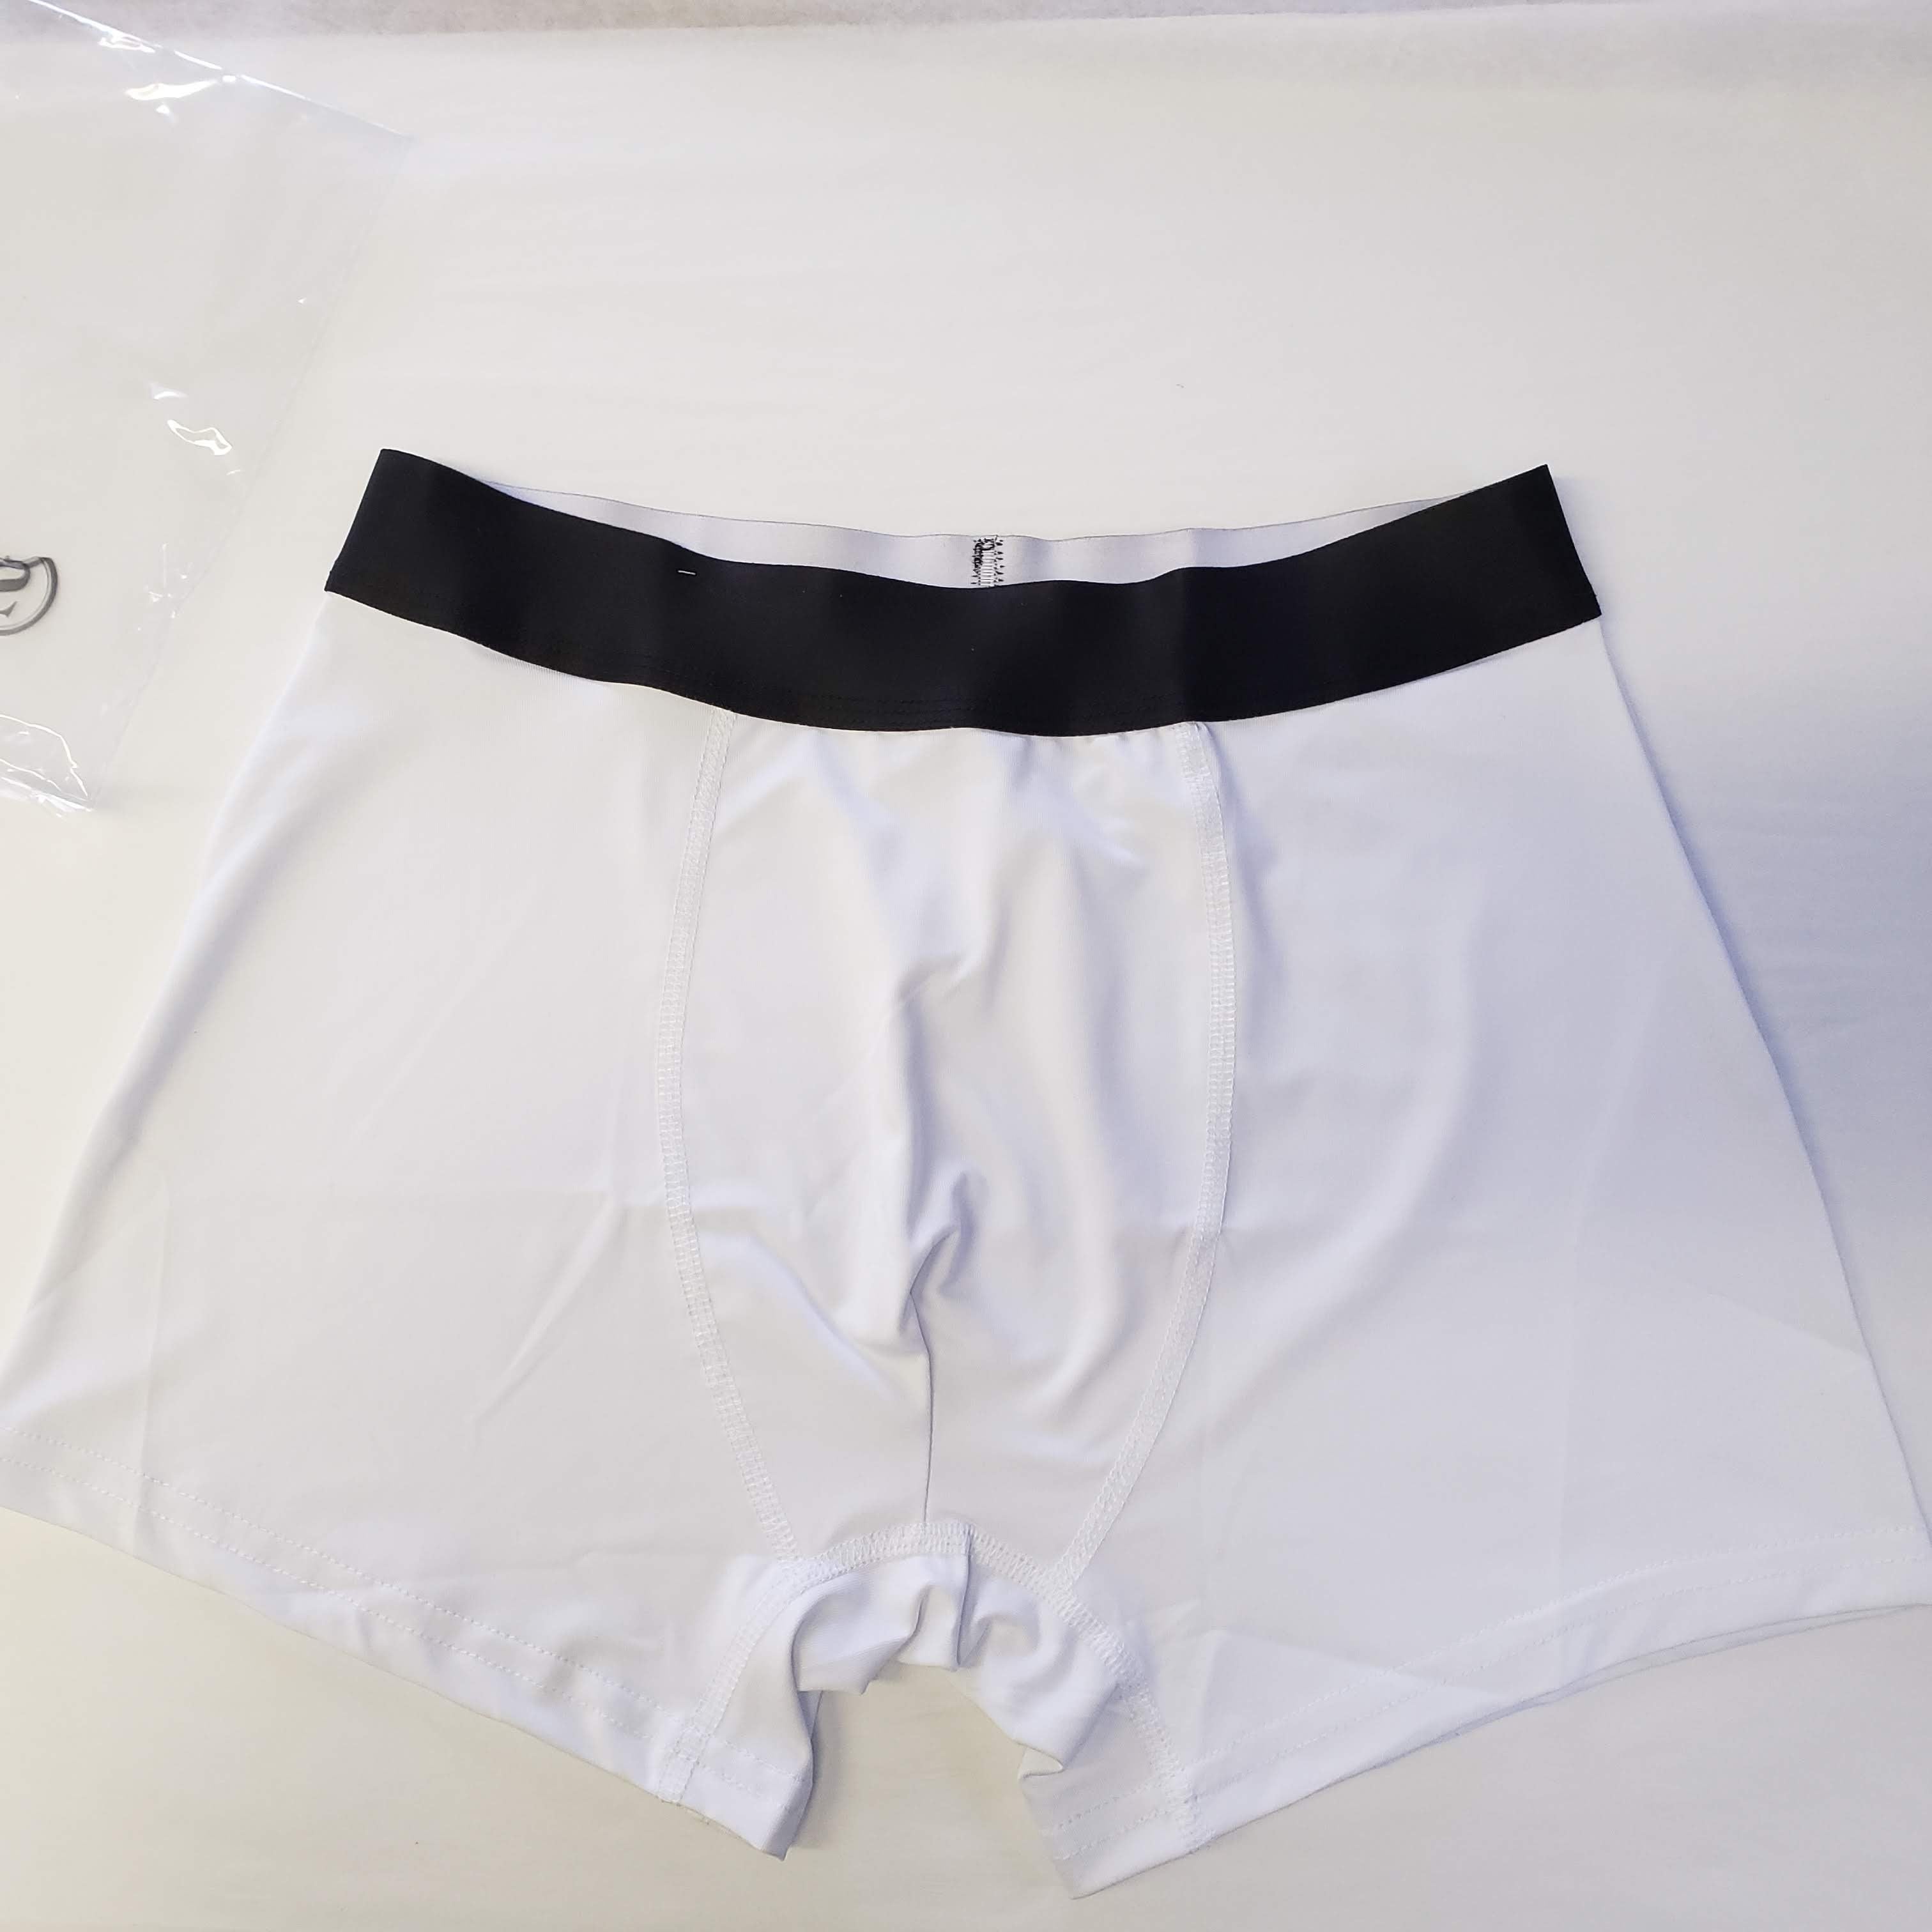 Wood Underwear Boxer Briefs with Fly